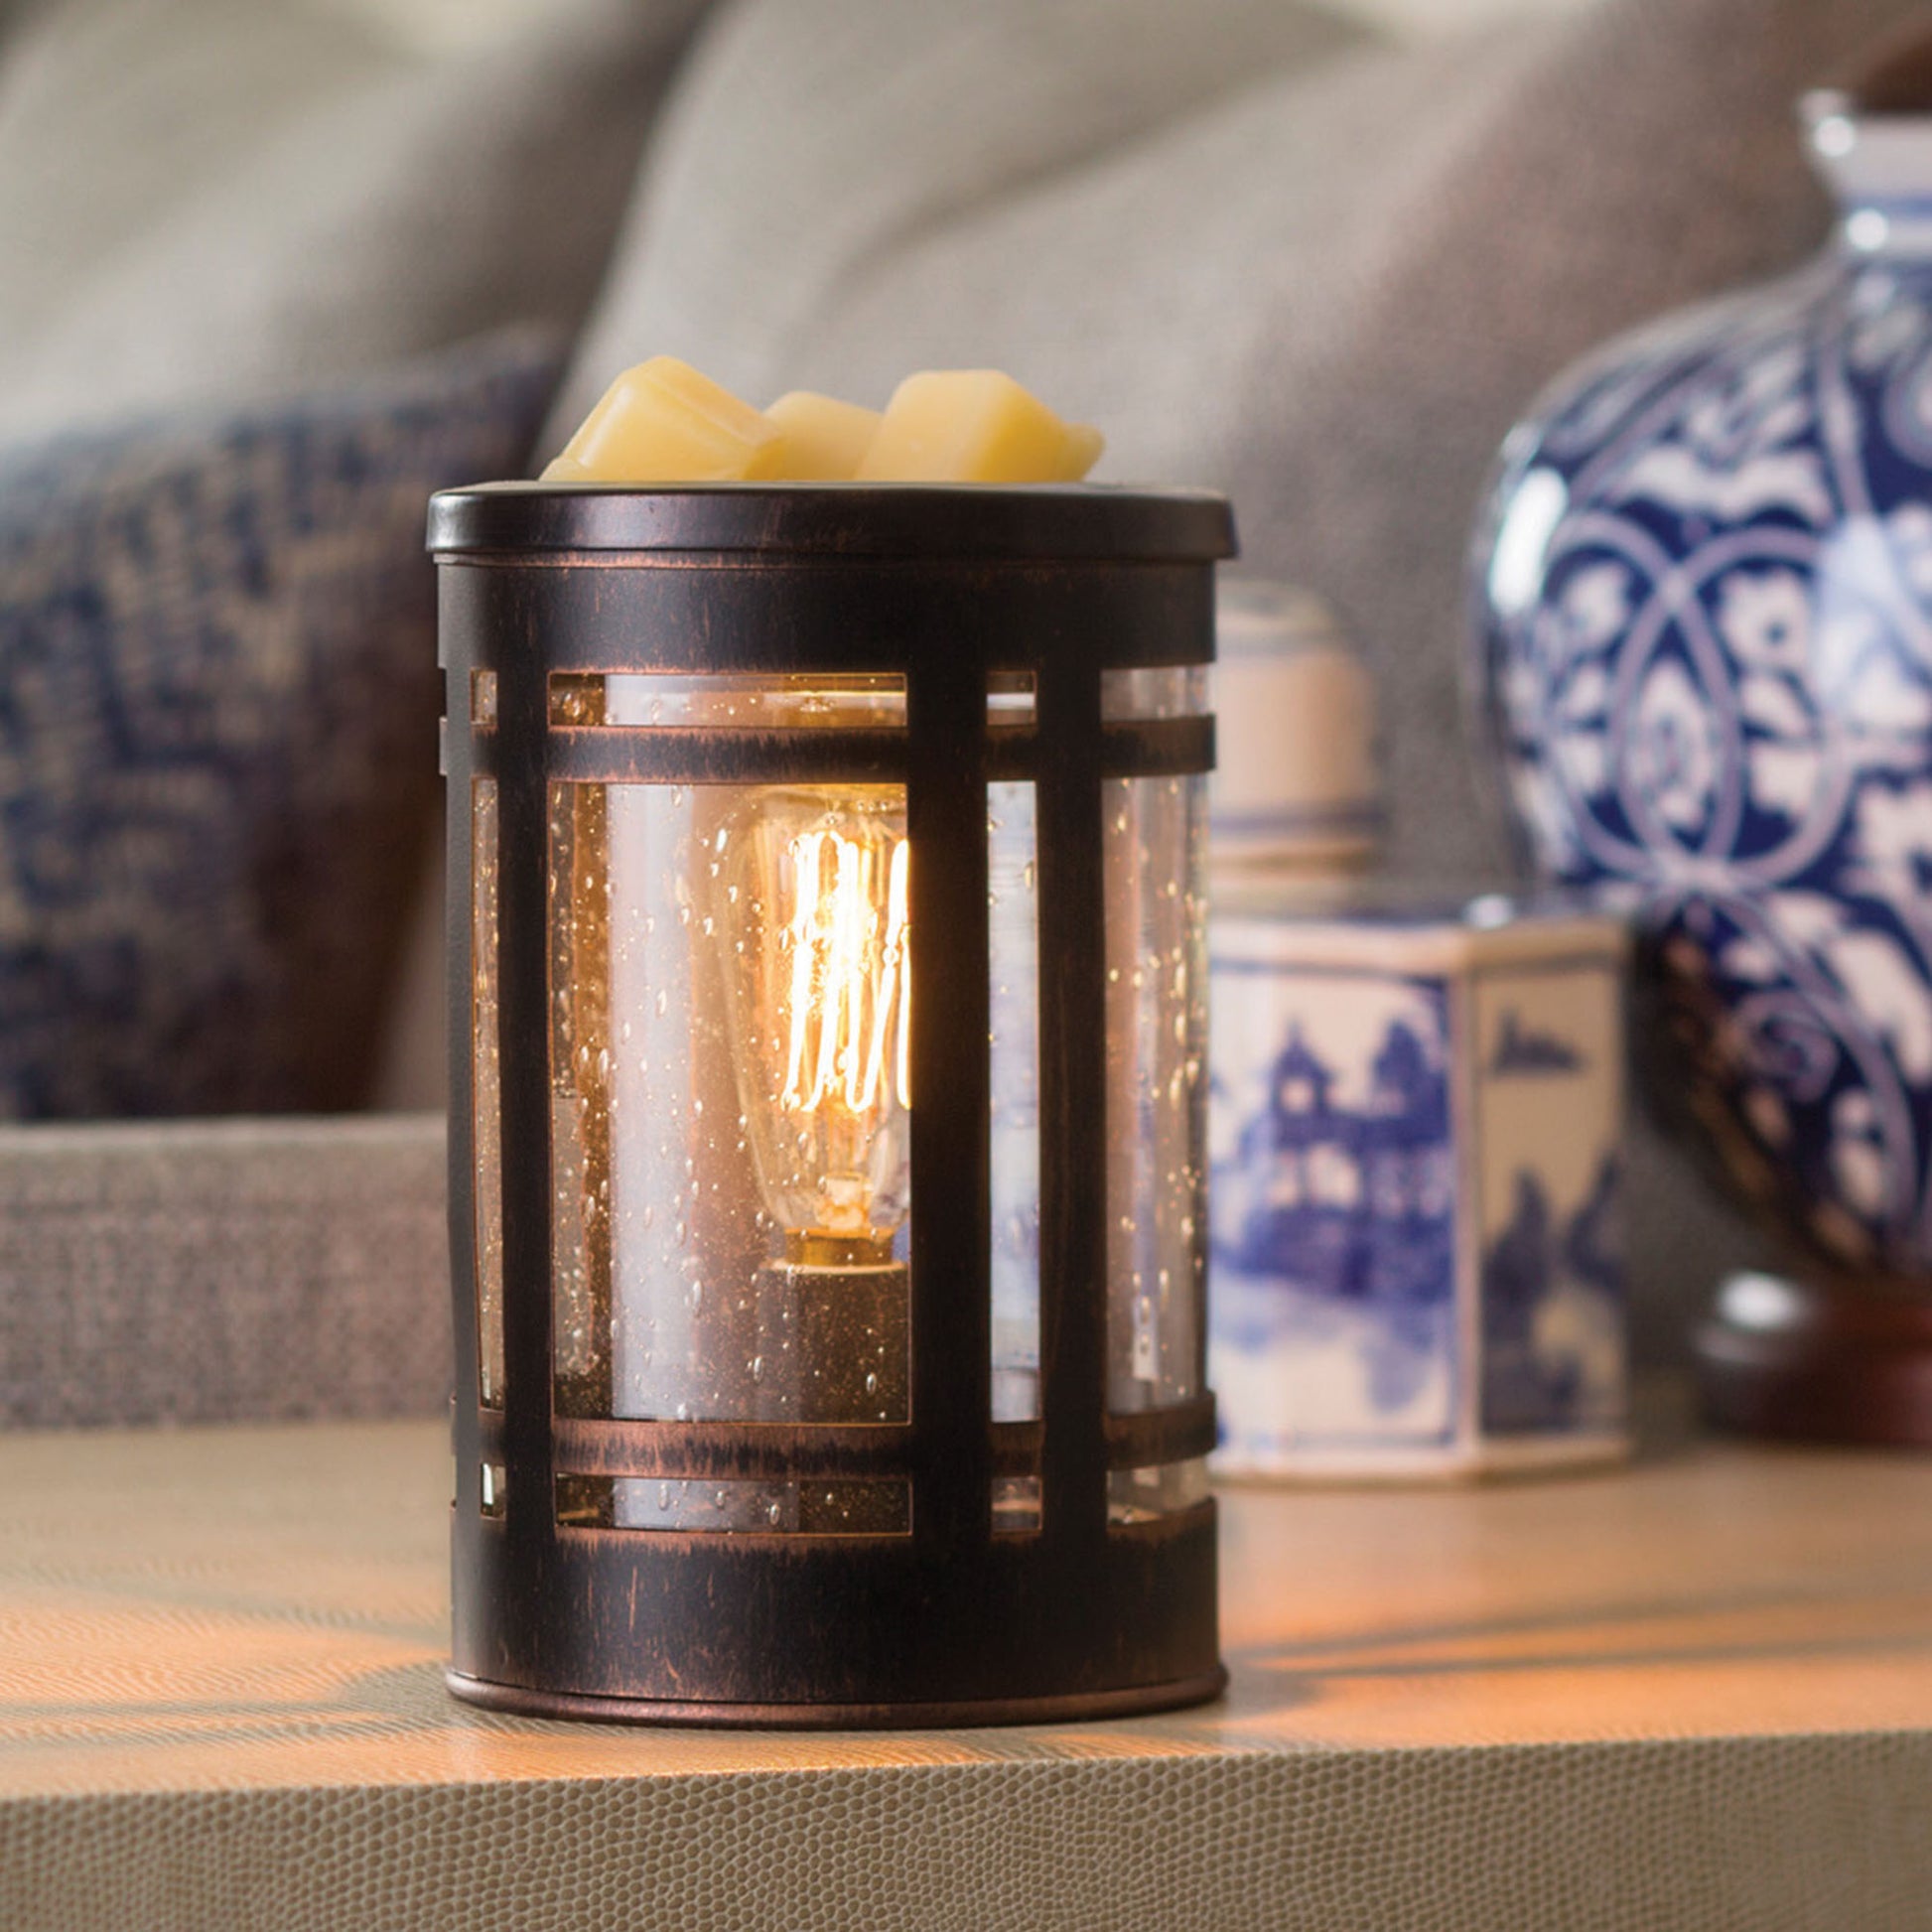 Mission - Illumination Wax Melt Warmer on a Coffee Table | Happy Piranha